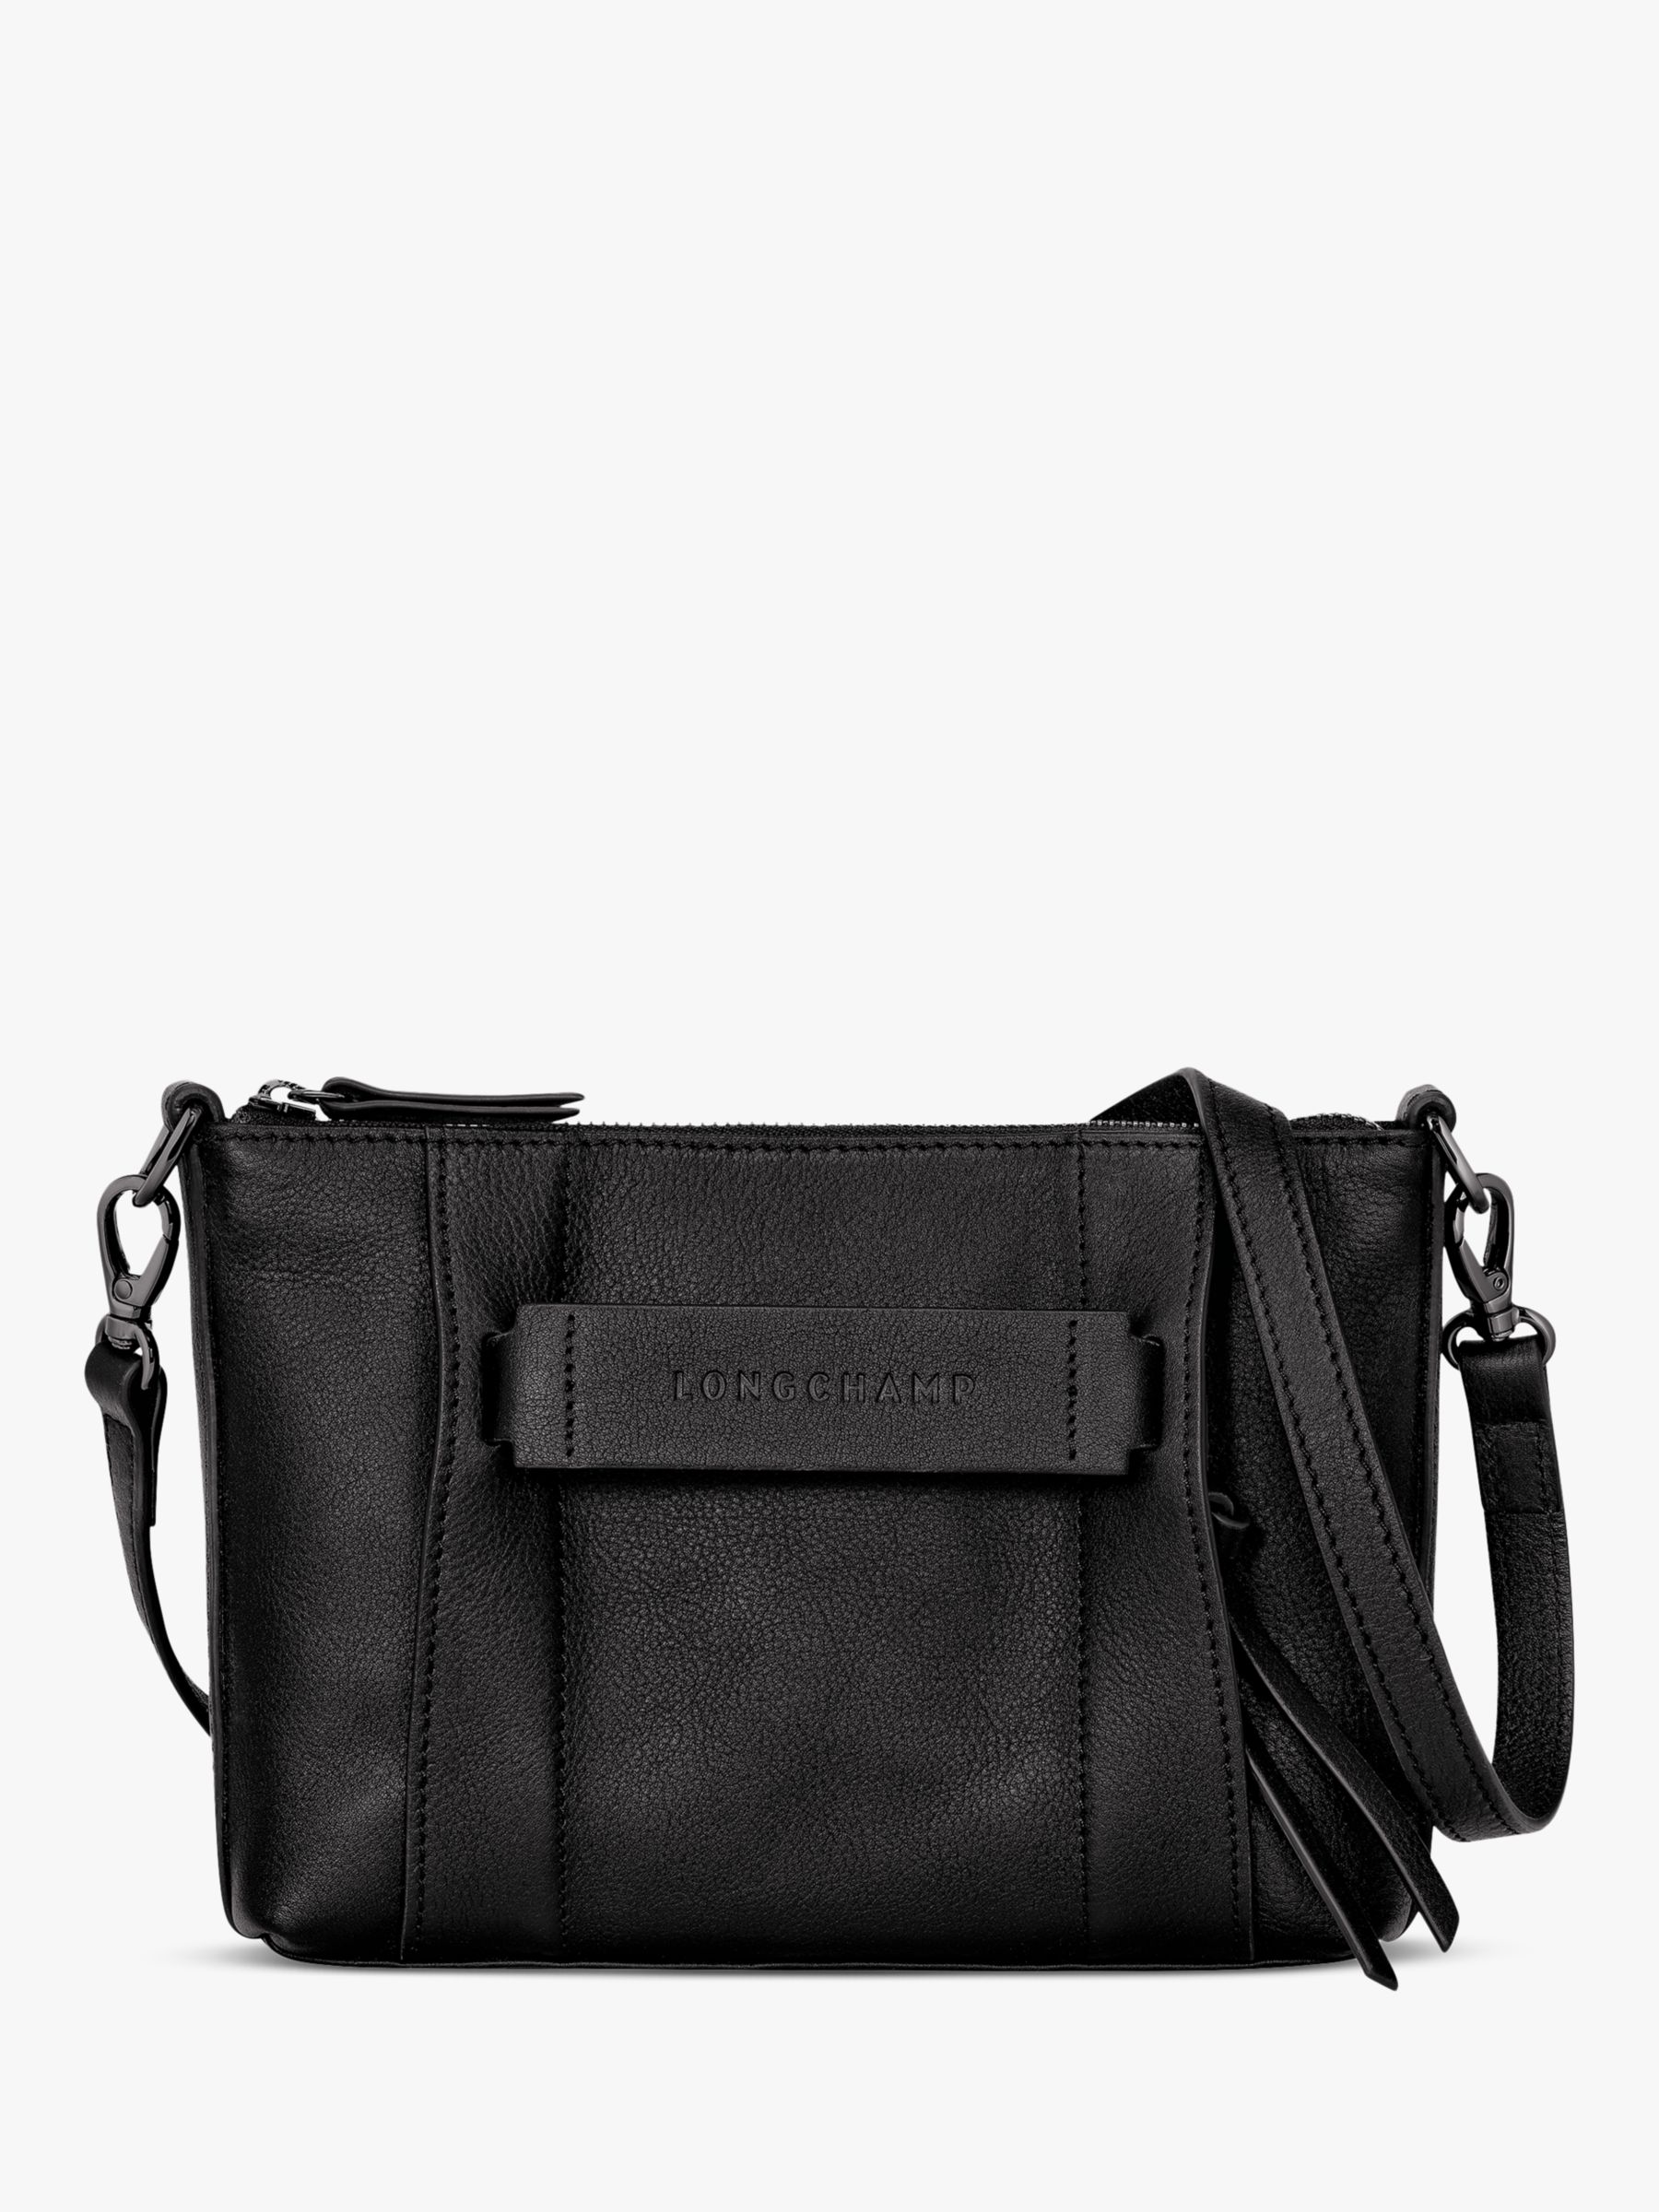 Longchamp 3D Small Cross Body Bag, Black at John Lewis & Partners